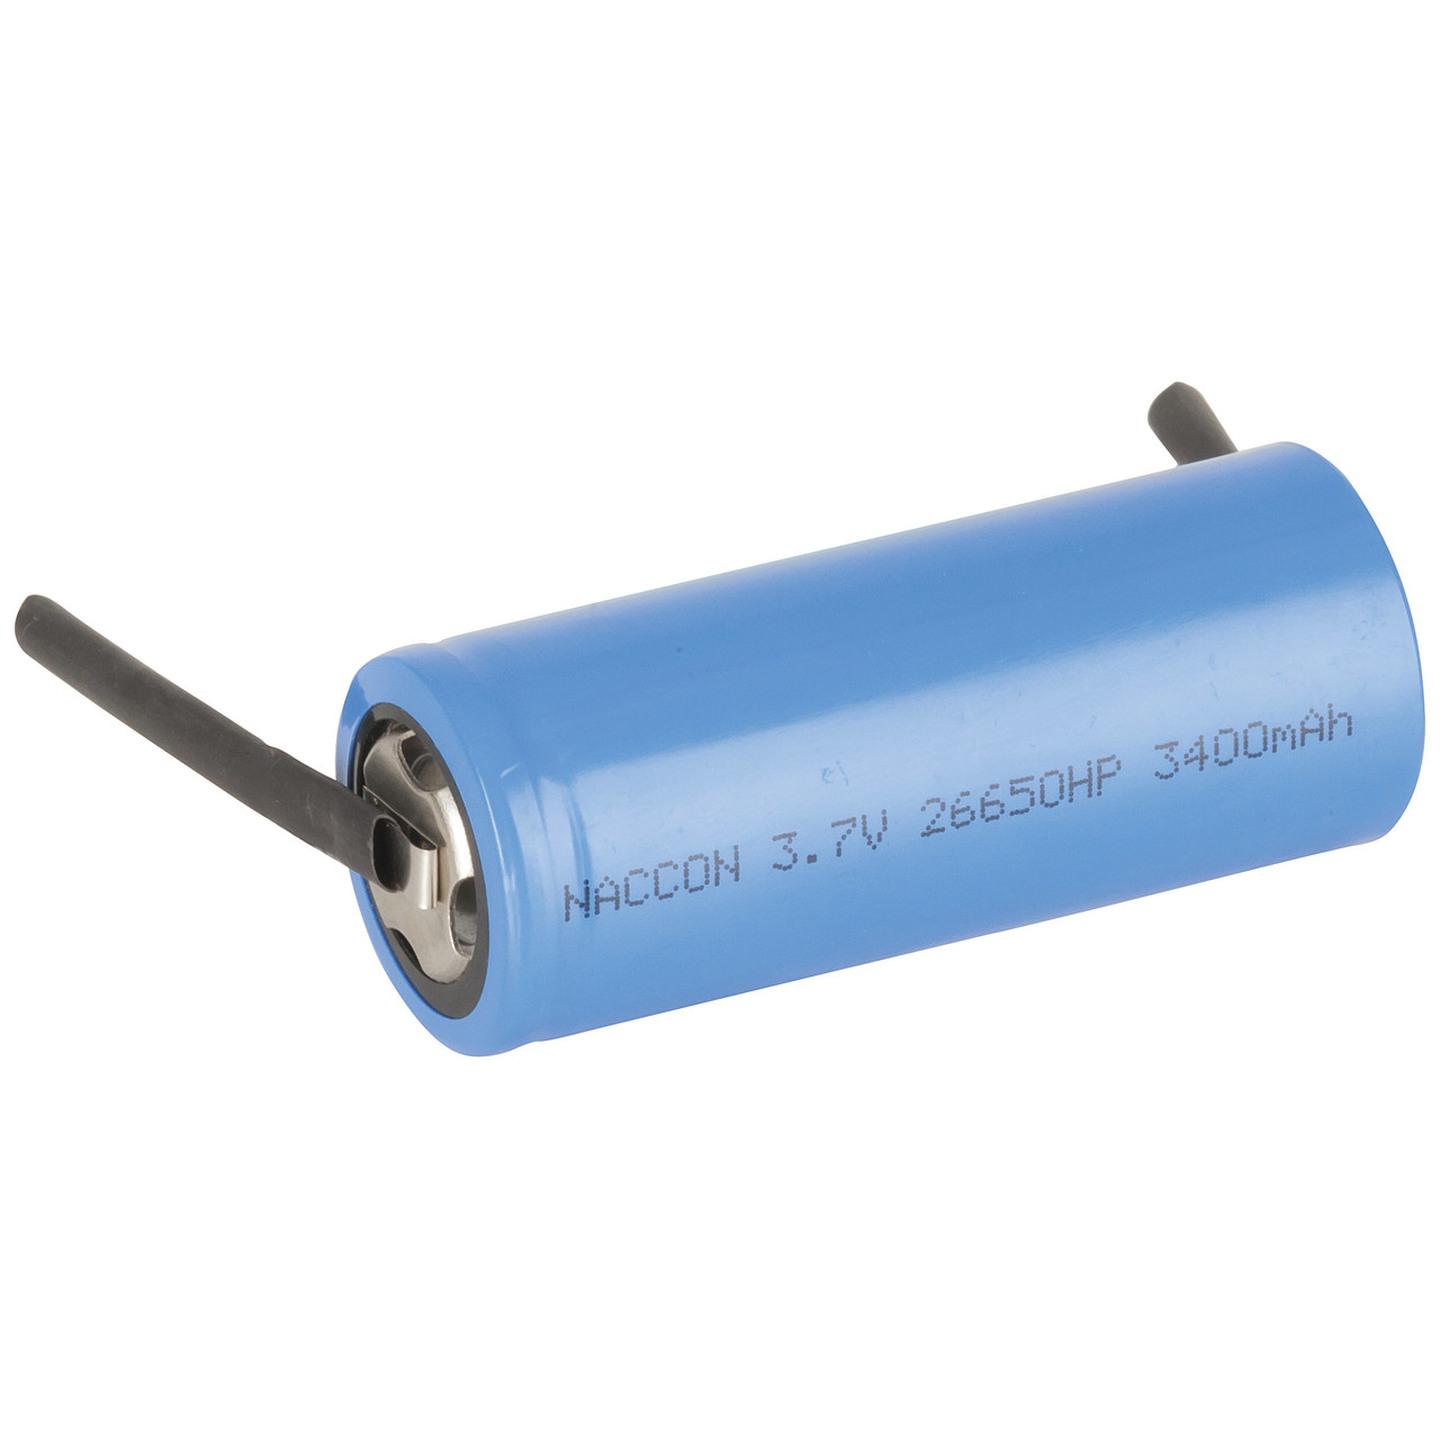 26650 Rechargeable Li-Ion Battery 3400mAh 3.7V Solder Tag